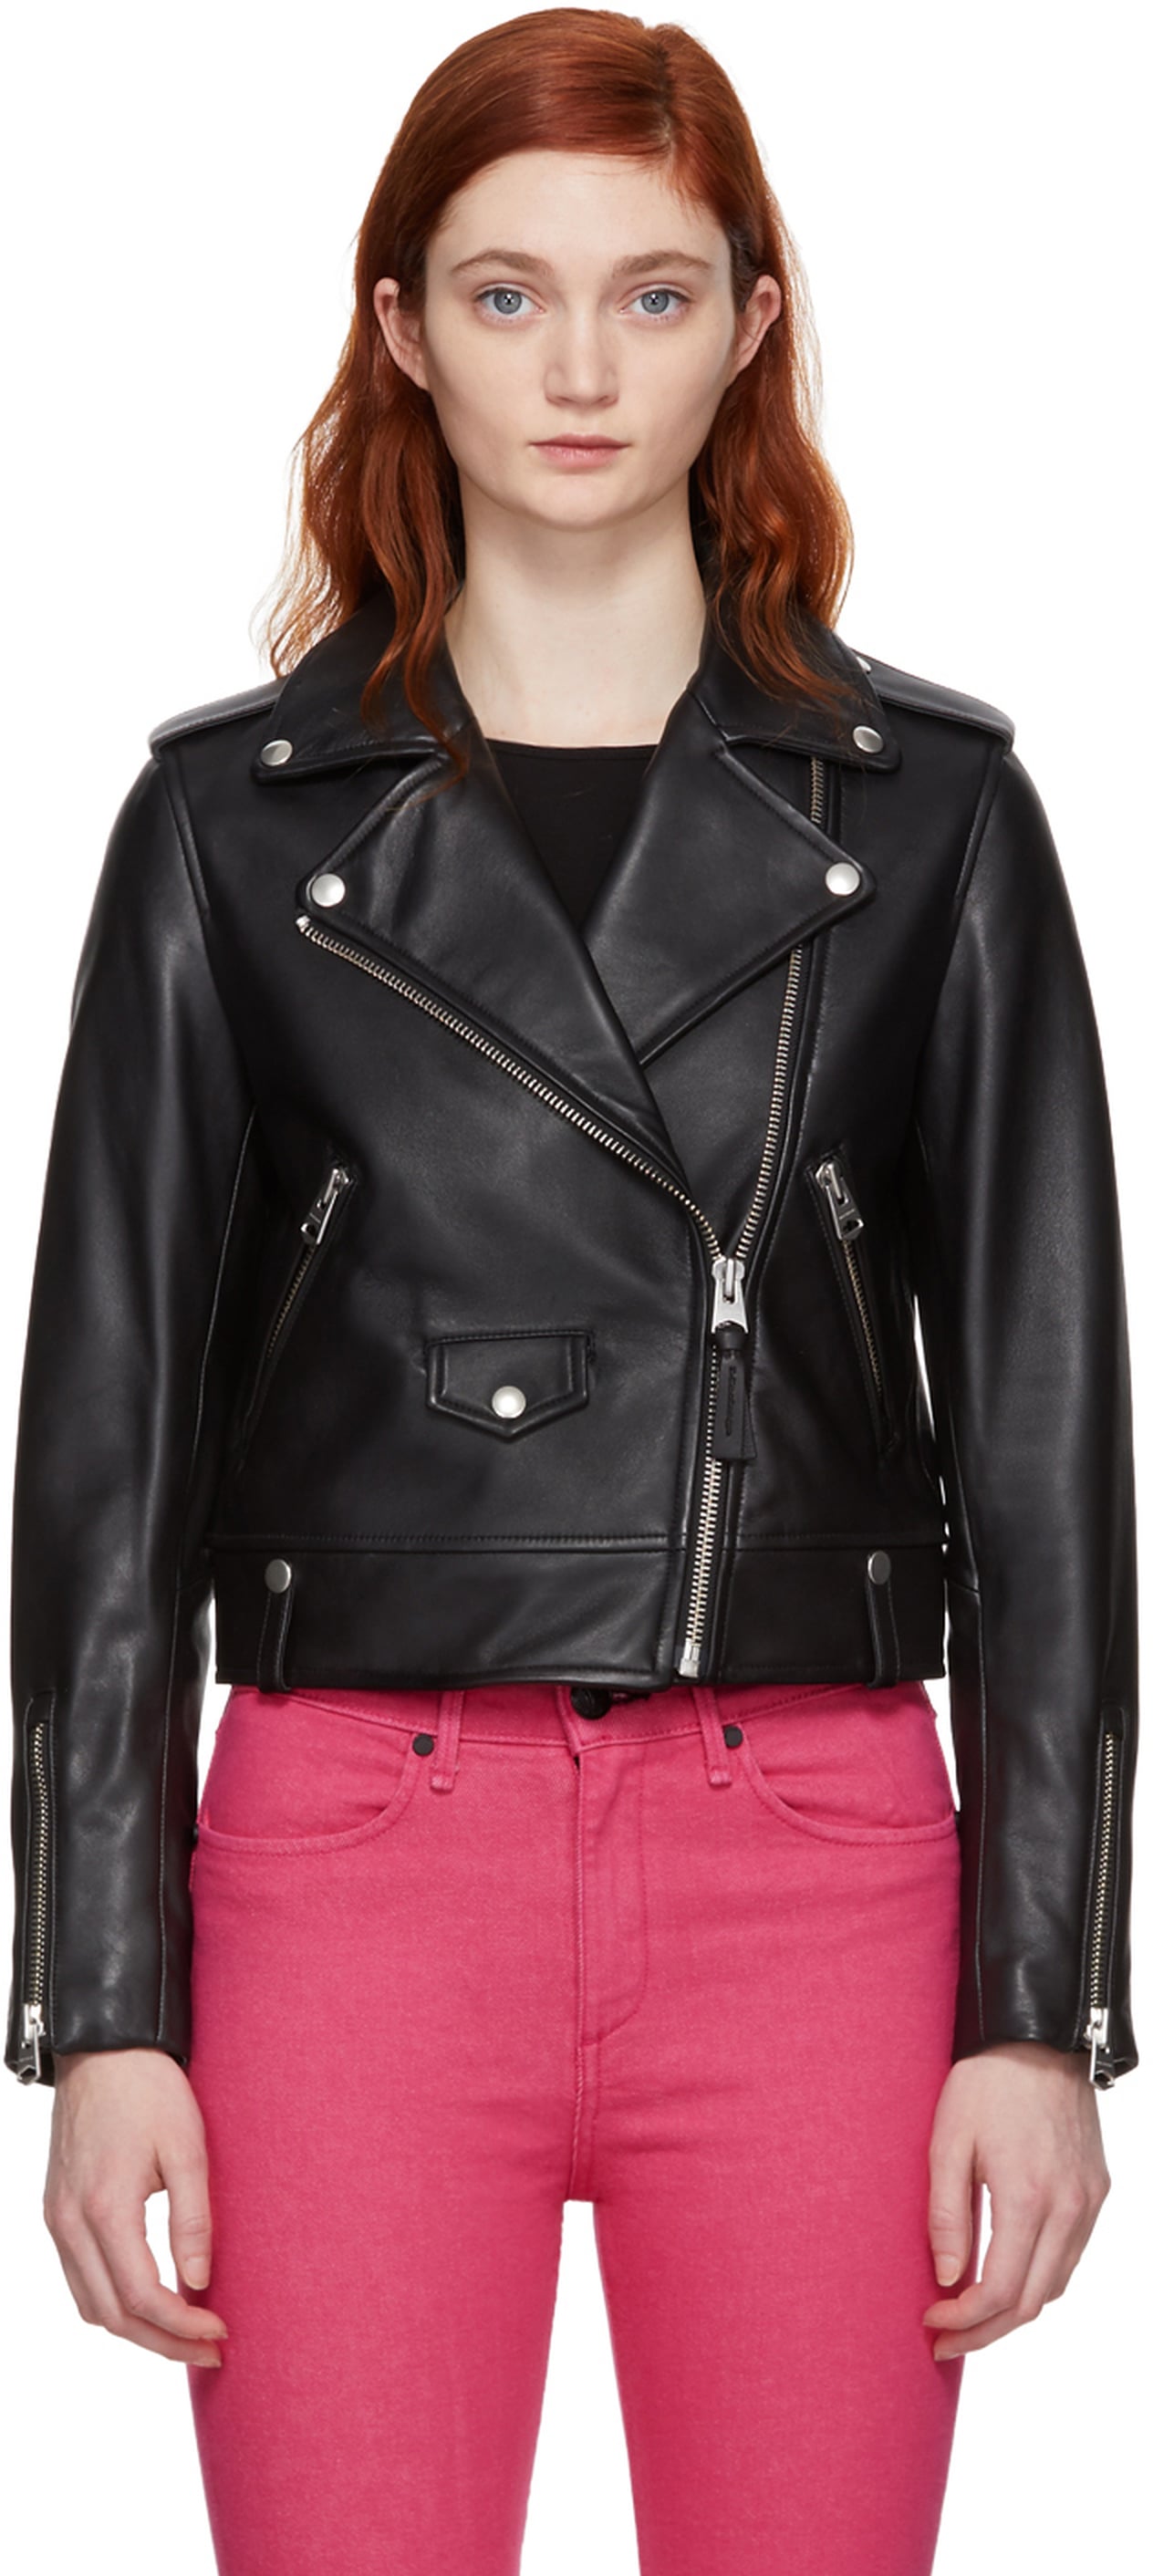 Princess Beatrice's Black Leather Jacket | POPSUGAR Fashion